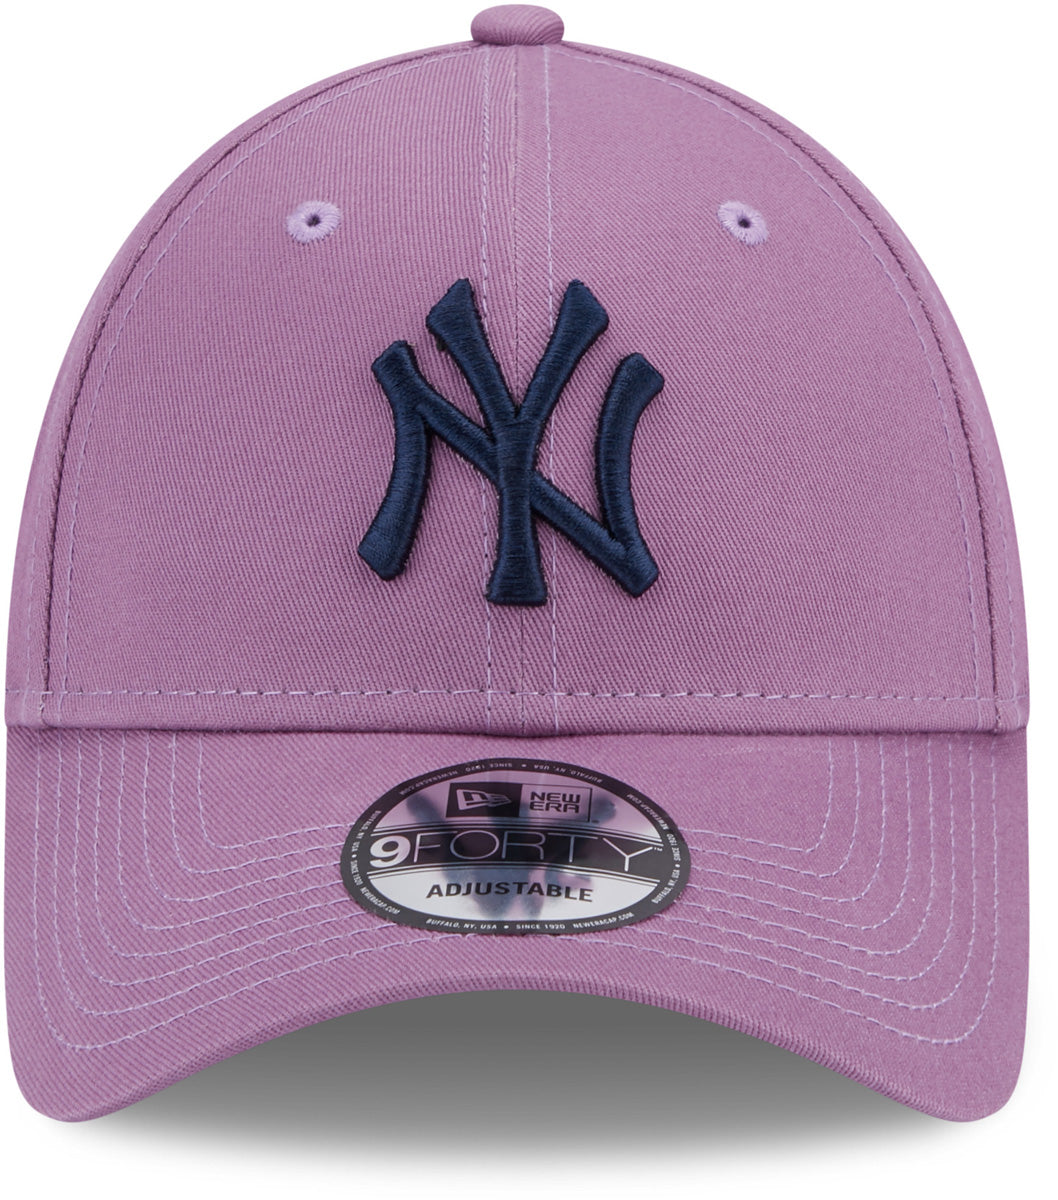 New Era 9FORTY New York Yankees Cap Pink